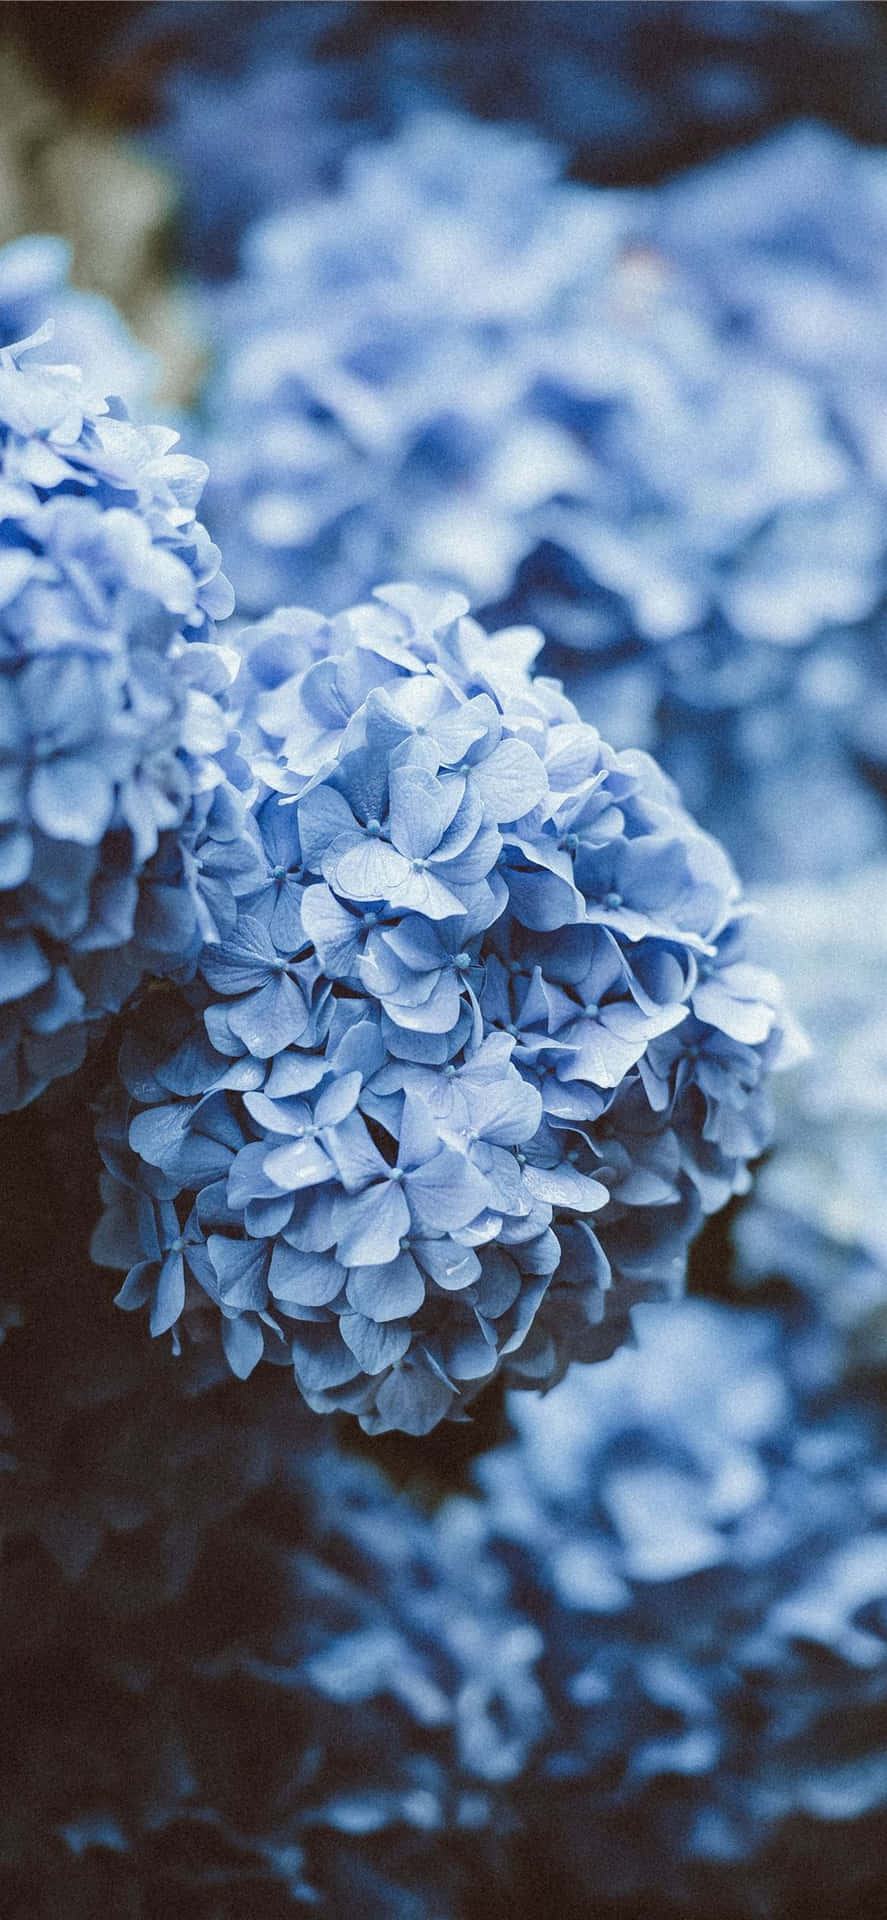 Bush Of Hortensia Blue Flowers Background